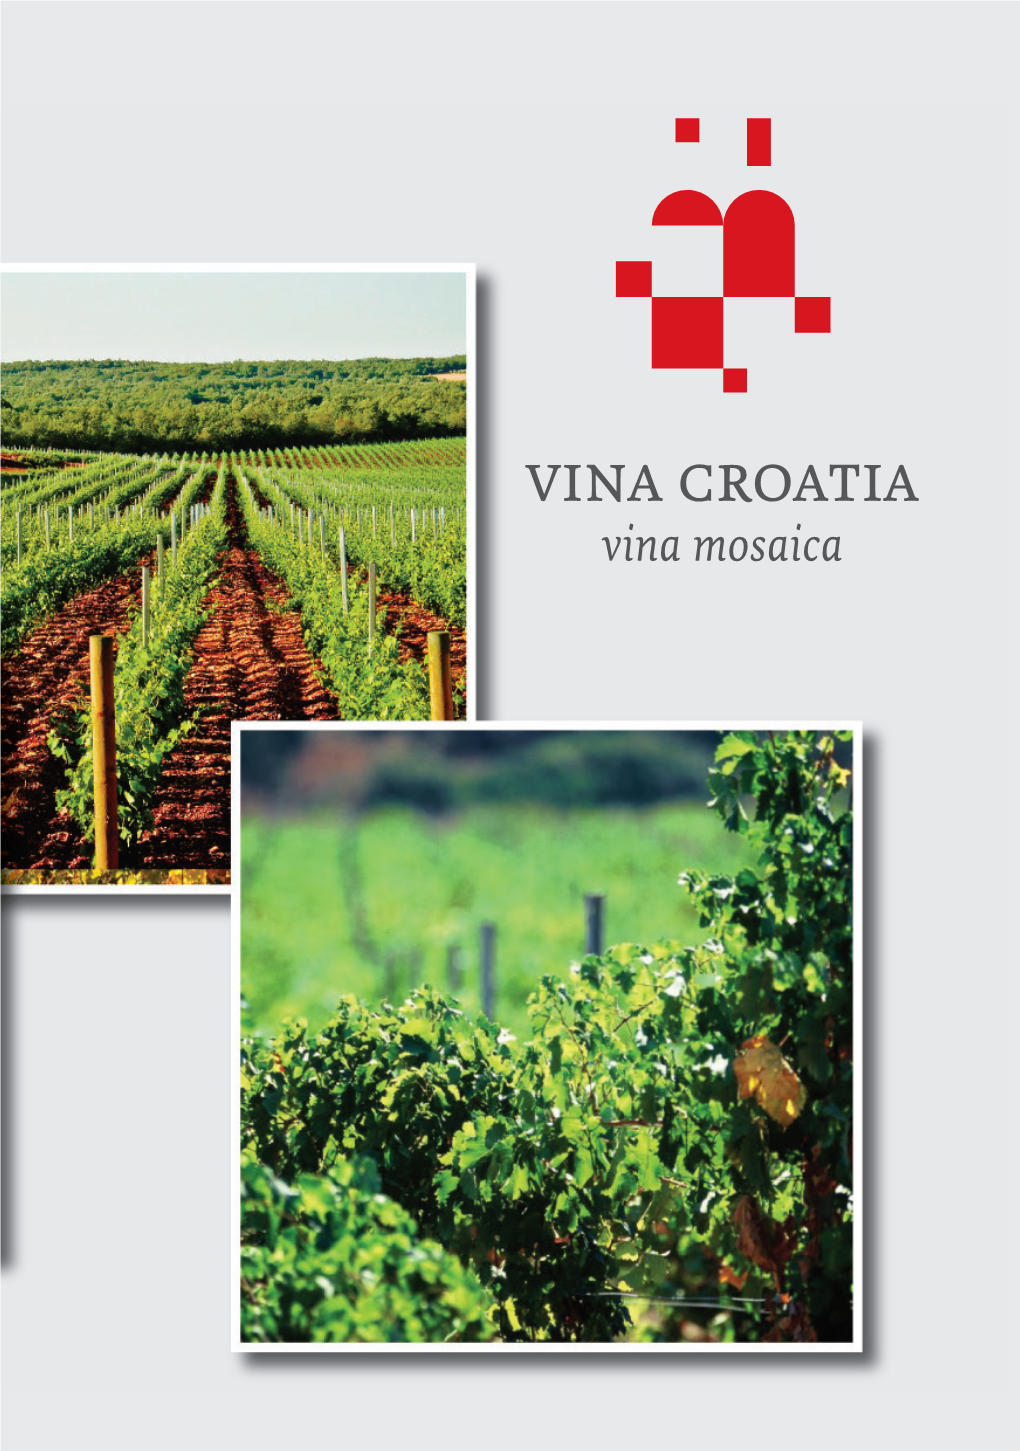 The Cuisine of Croatia's Wine Regions